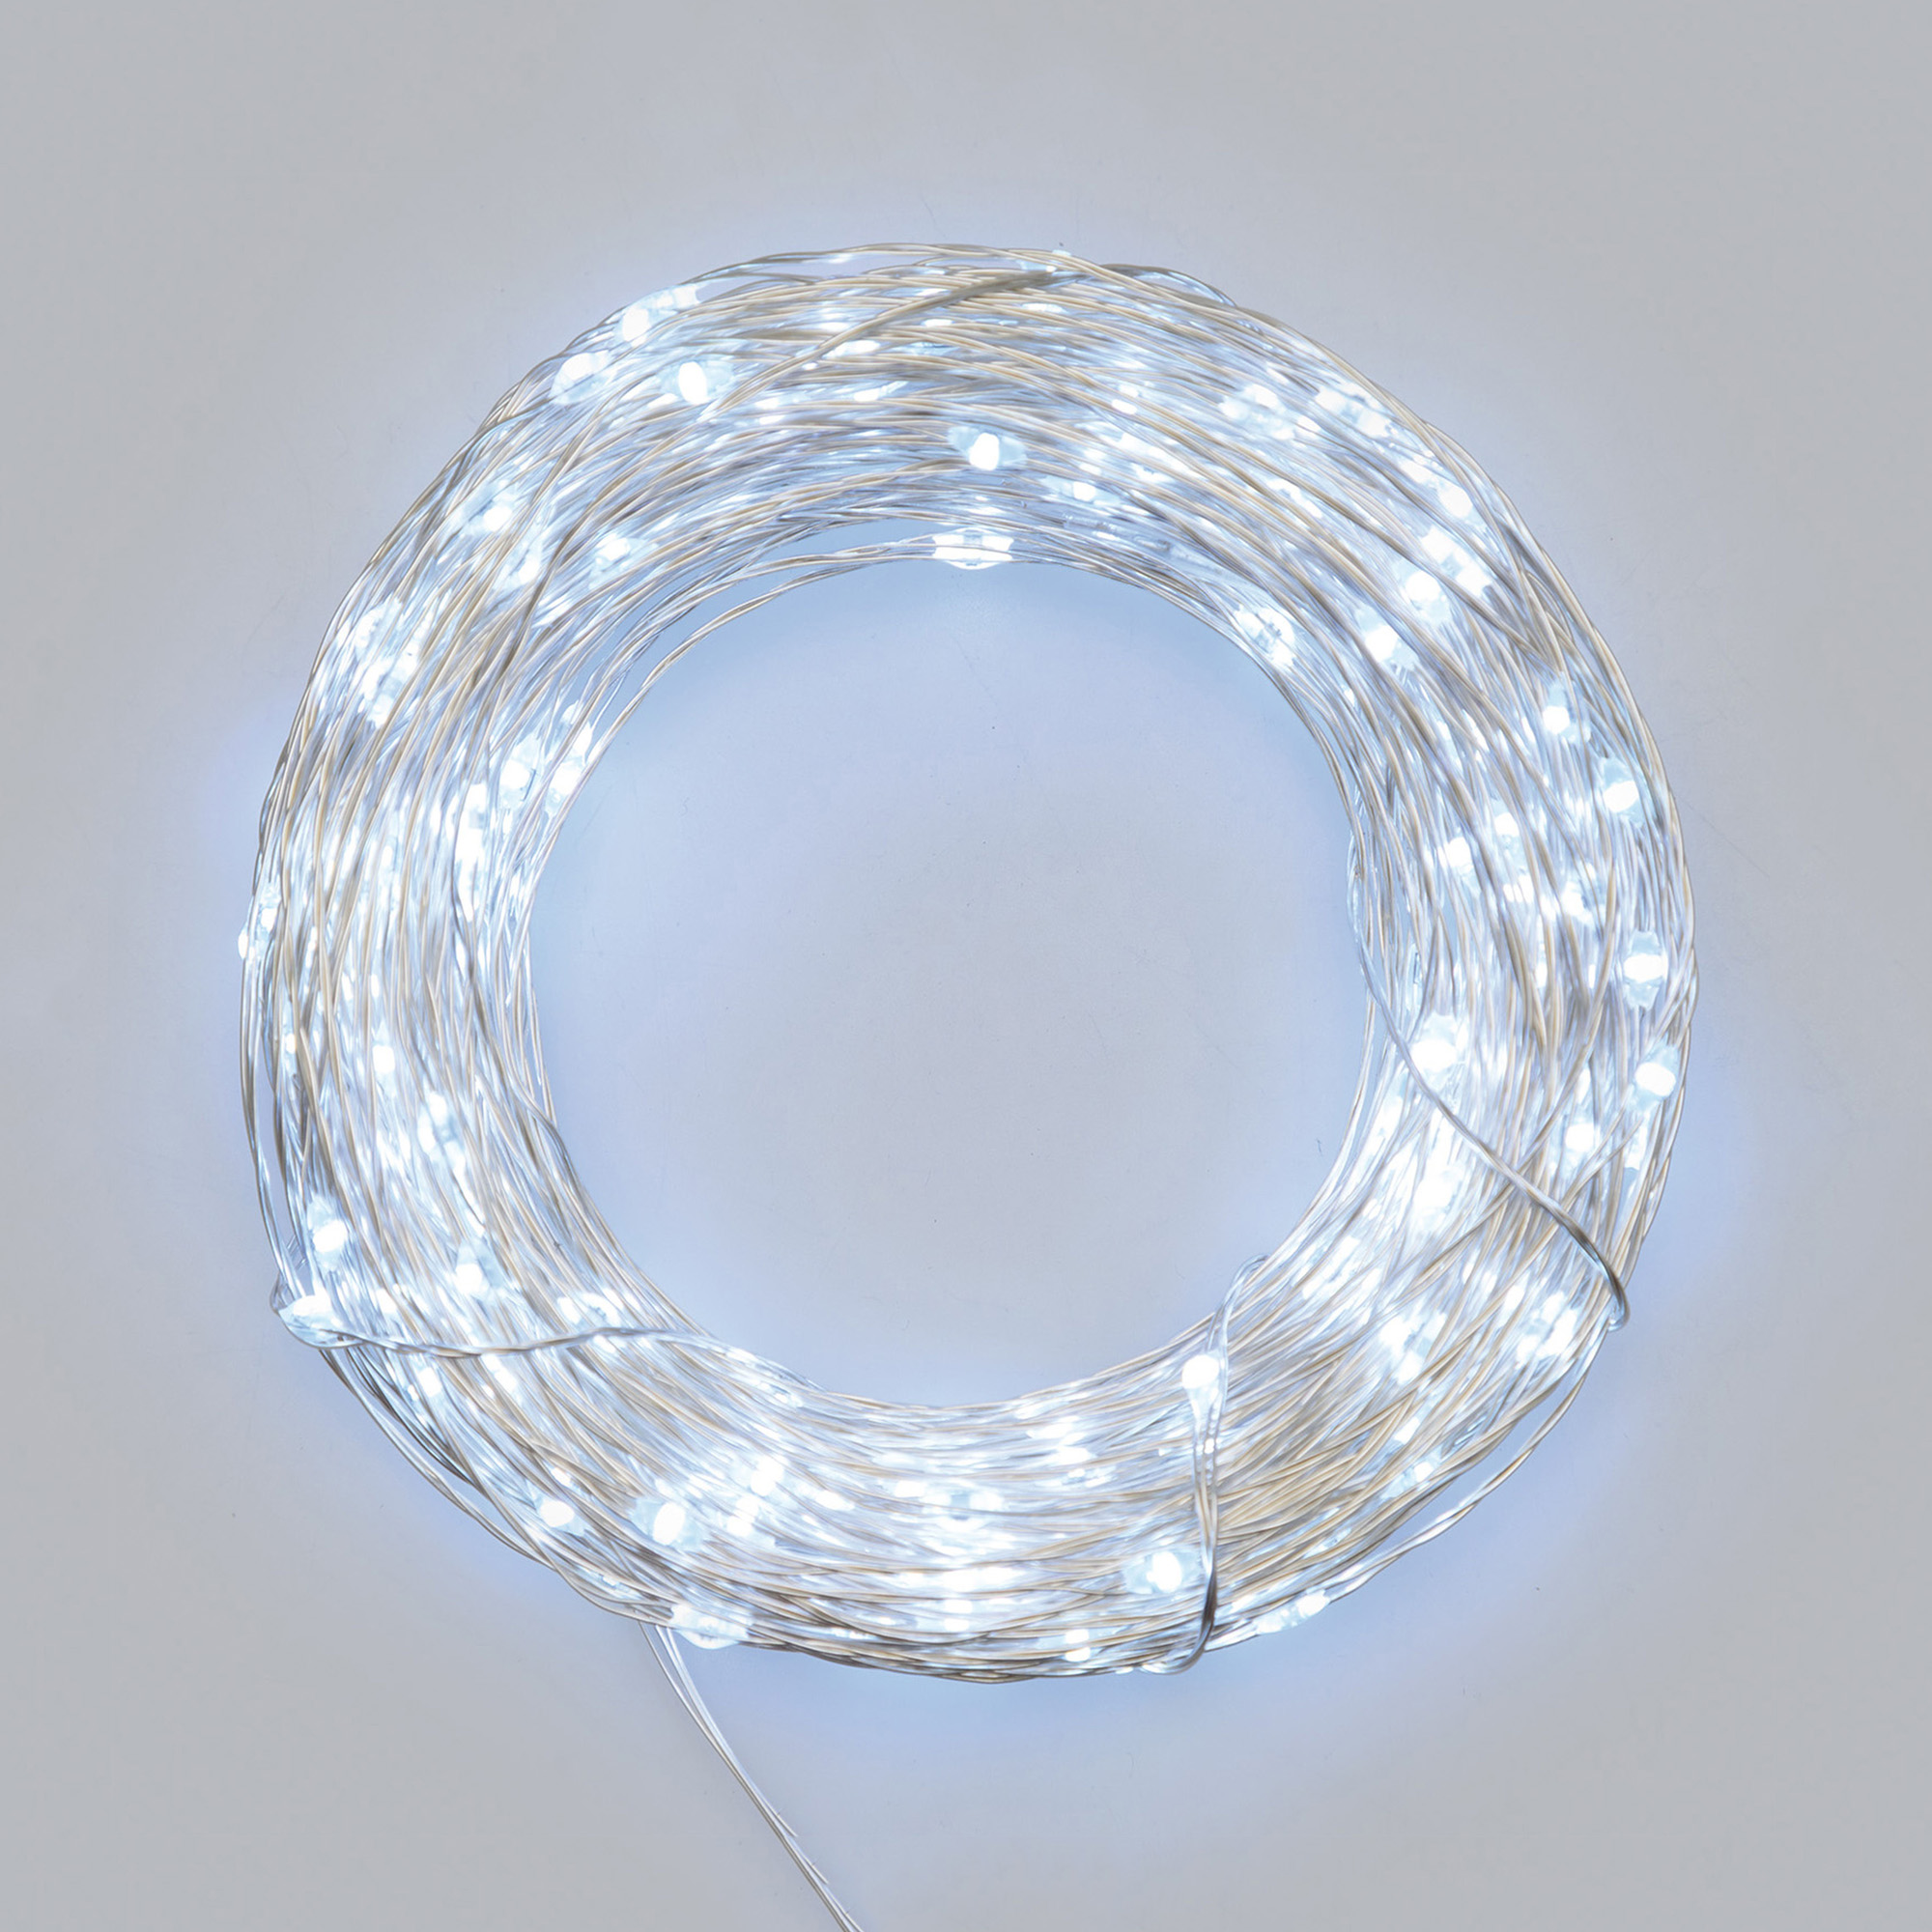 Instalatie luminoasa Micro-LED 200 LEDuri Alb Rece, Telecomanda, 15 Functii, Cu baterie